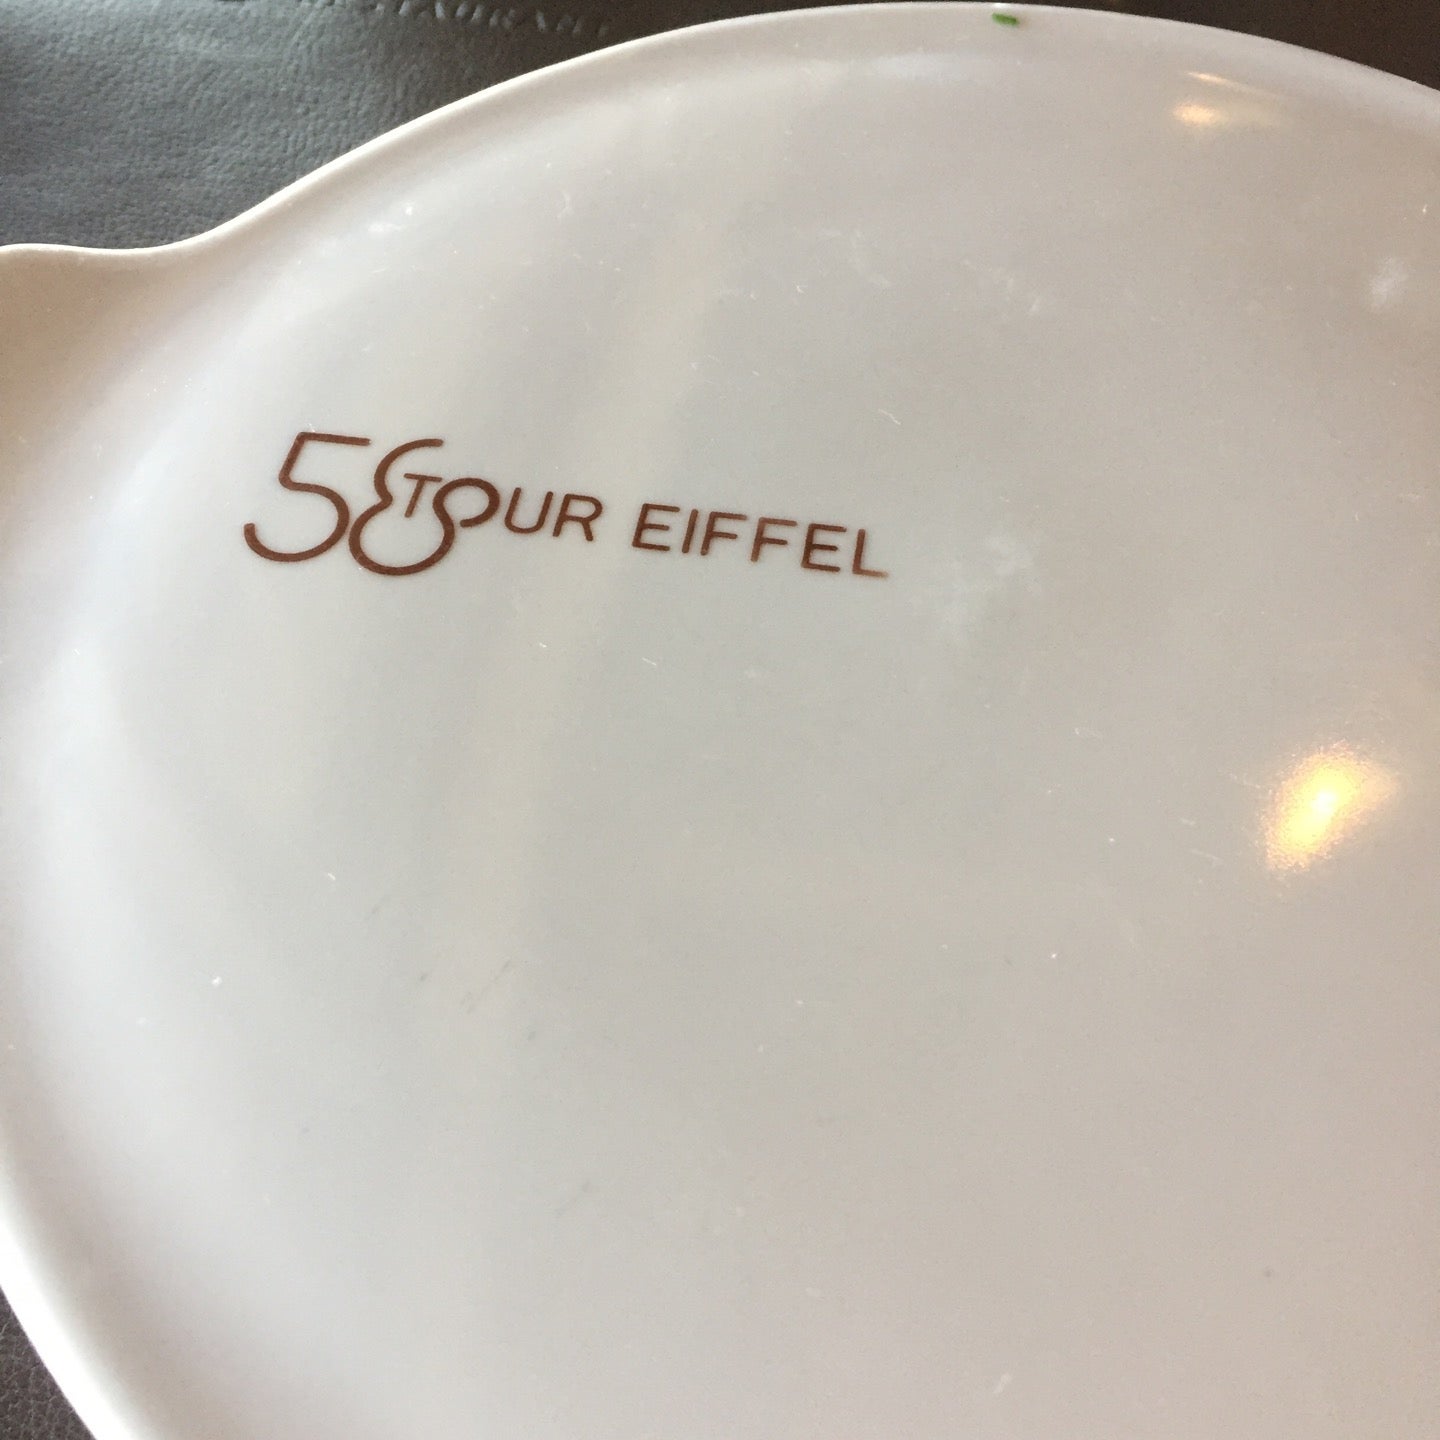 Restaurant 58 Tour Eiffel